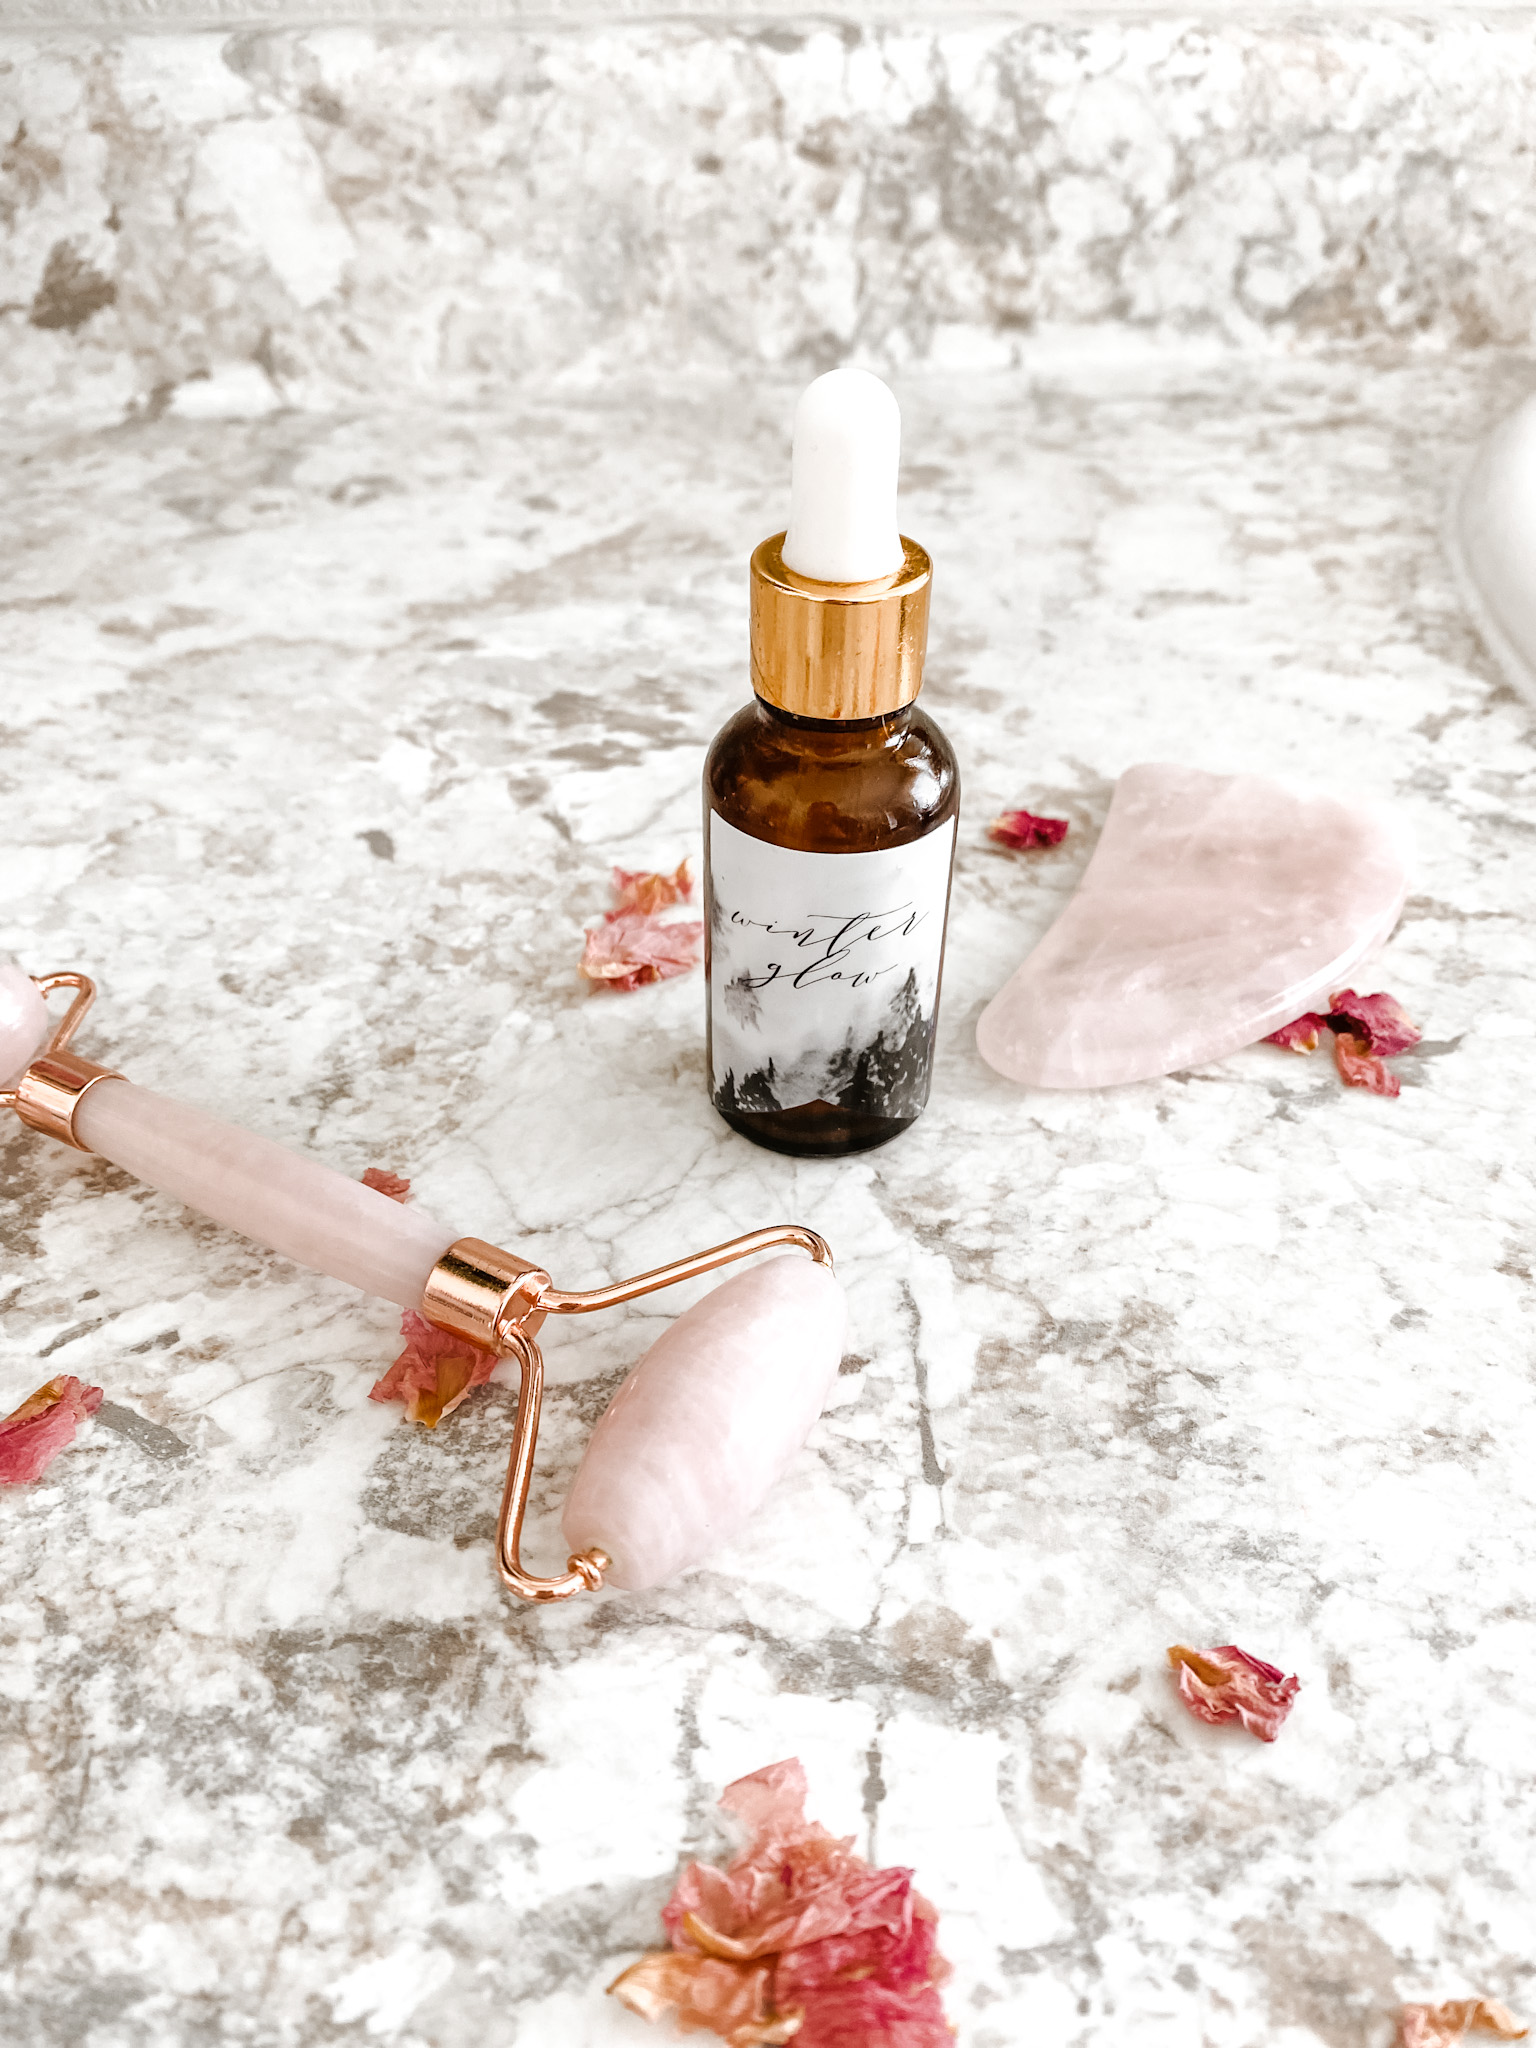 Glow Serum for natural skincare next to a rose quartz roller and pink rose petals.